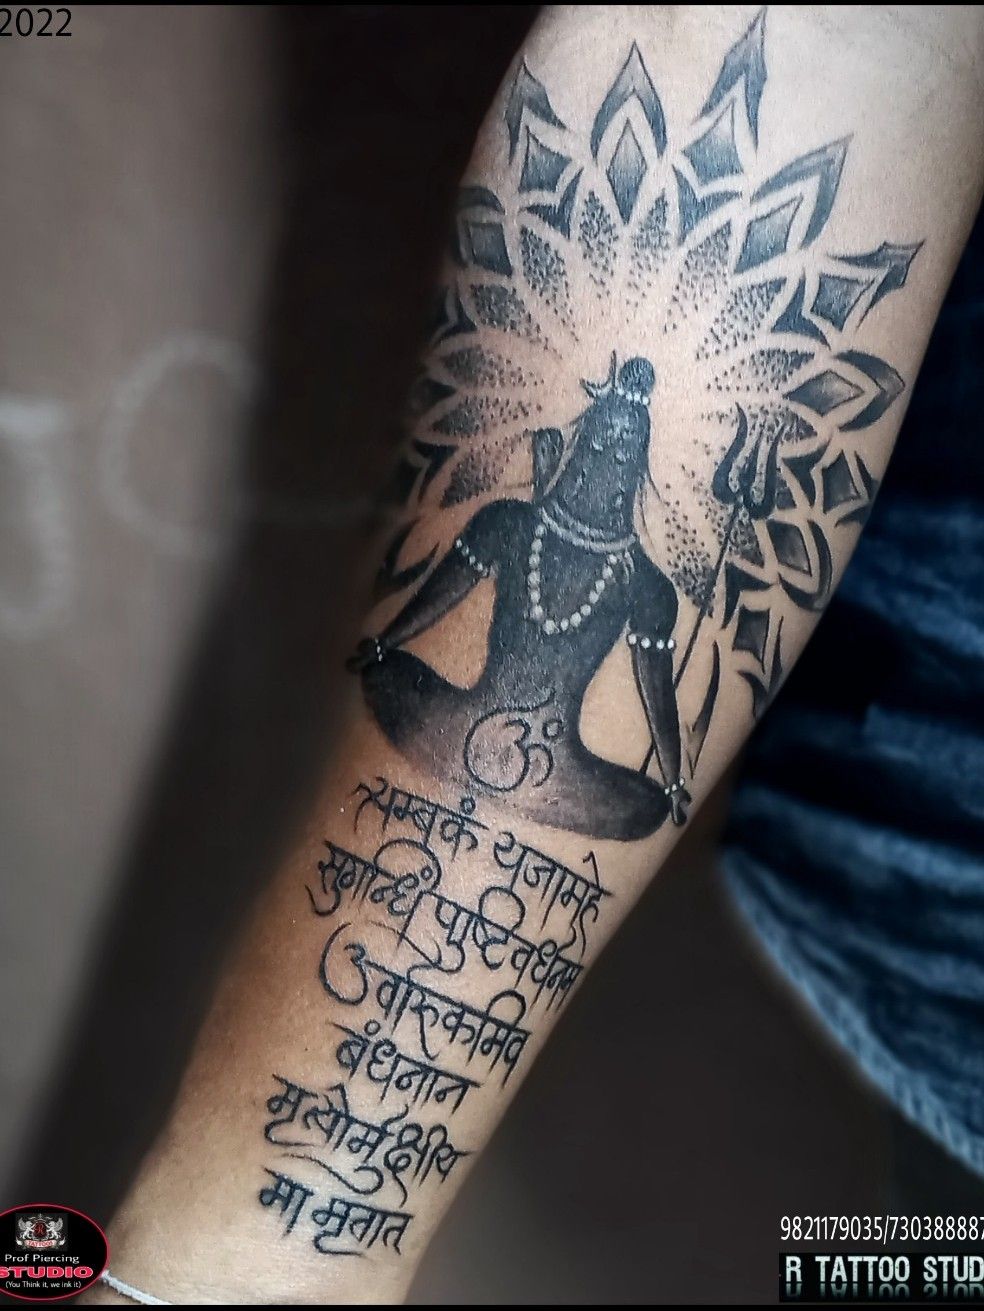 Faraz Javed Xpoze Tattoo on Instagram: 